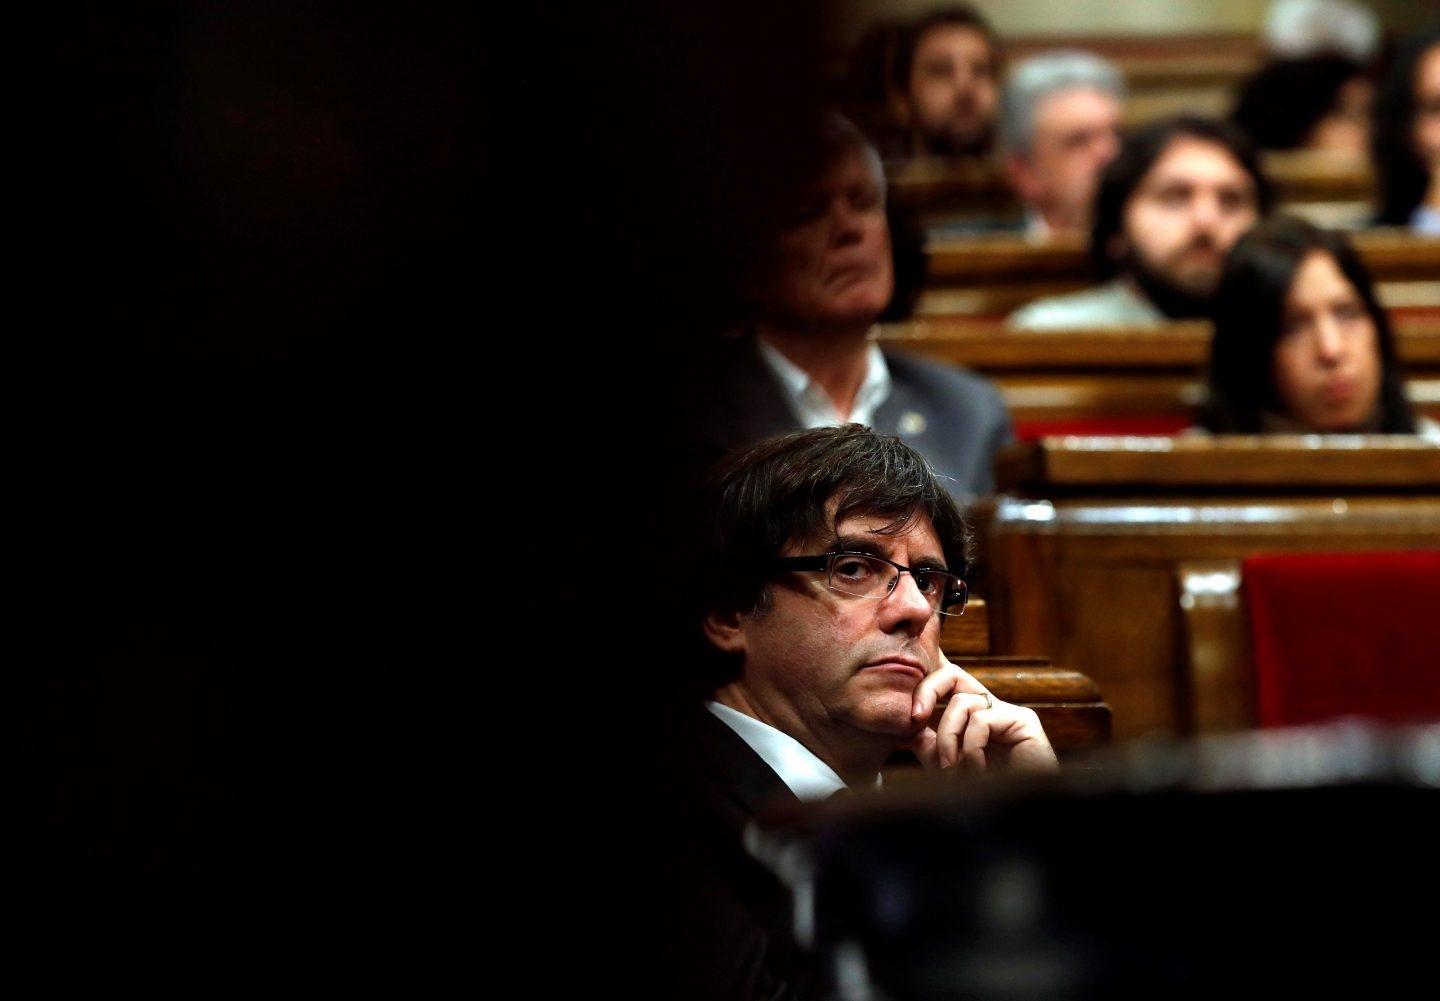 Carles Puigdemont en el Parlament de Cataluña.